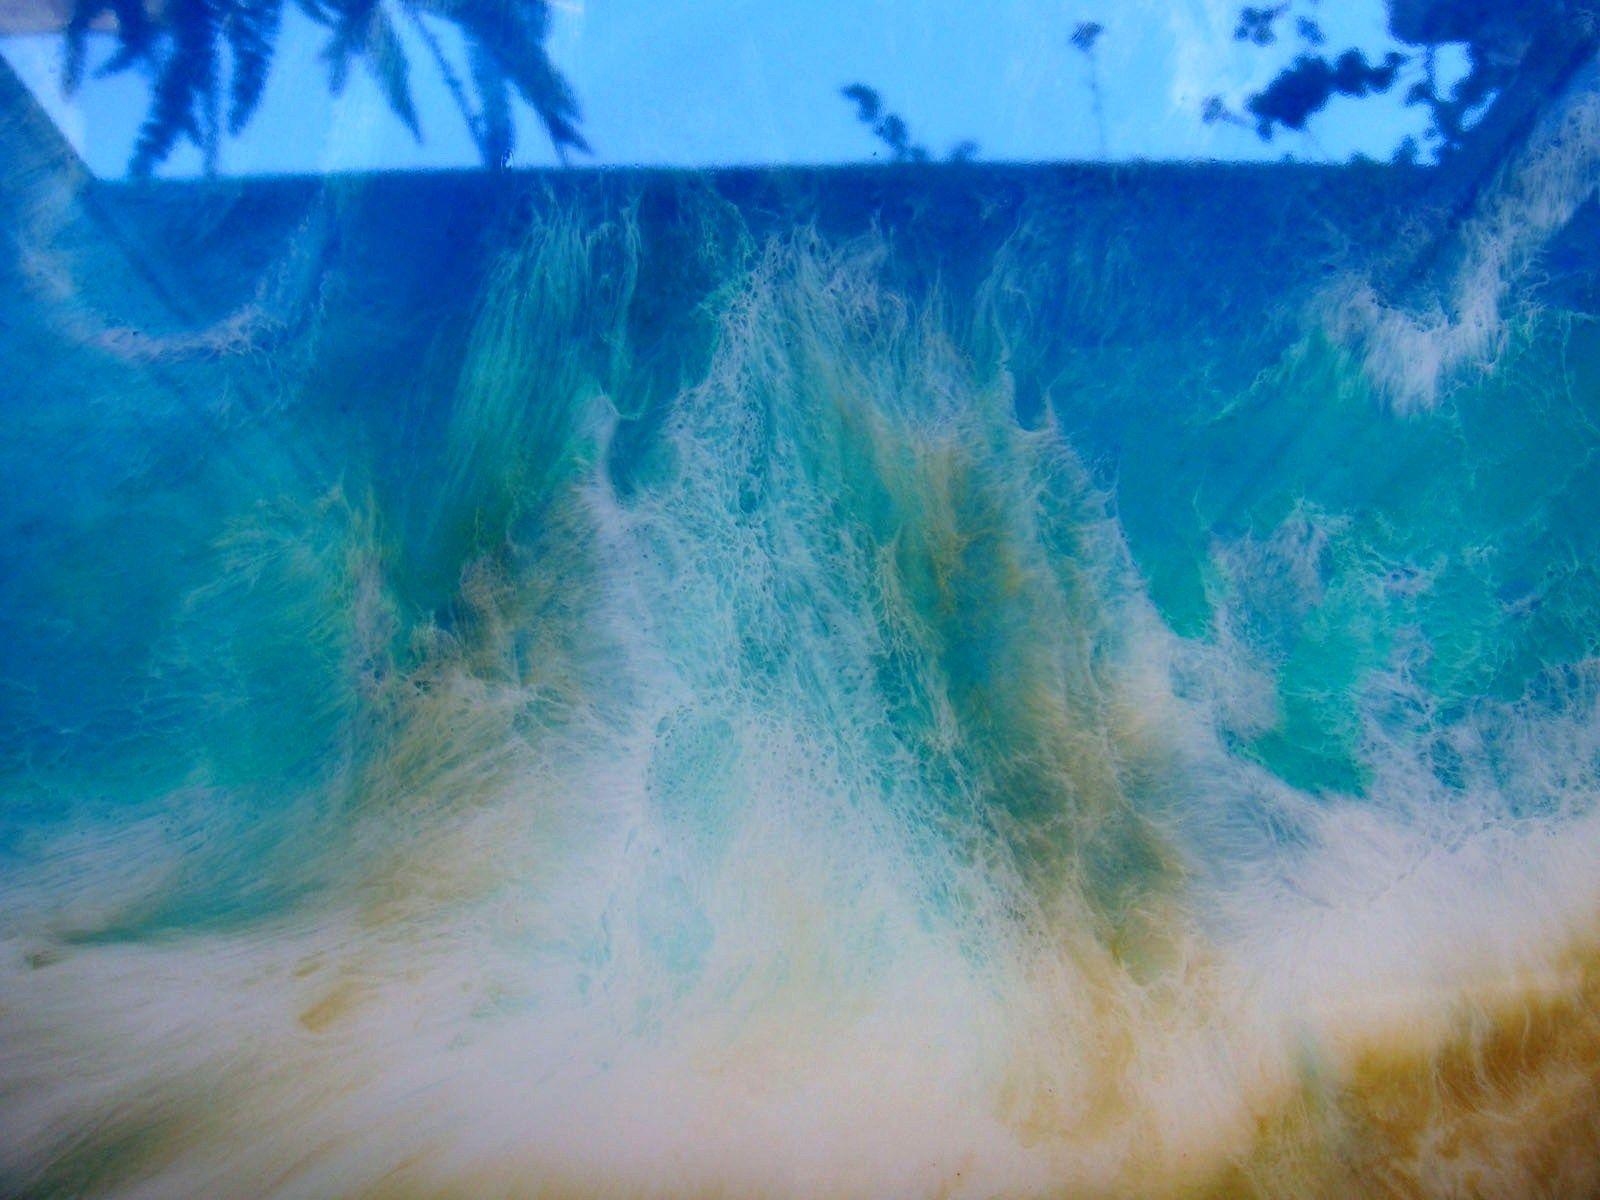 TURQUOISE SEA, Mixed Media on Wood Panel - Abstract Mixed Media Art by Irini Karpikioti